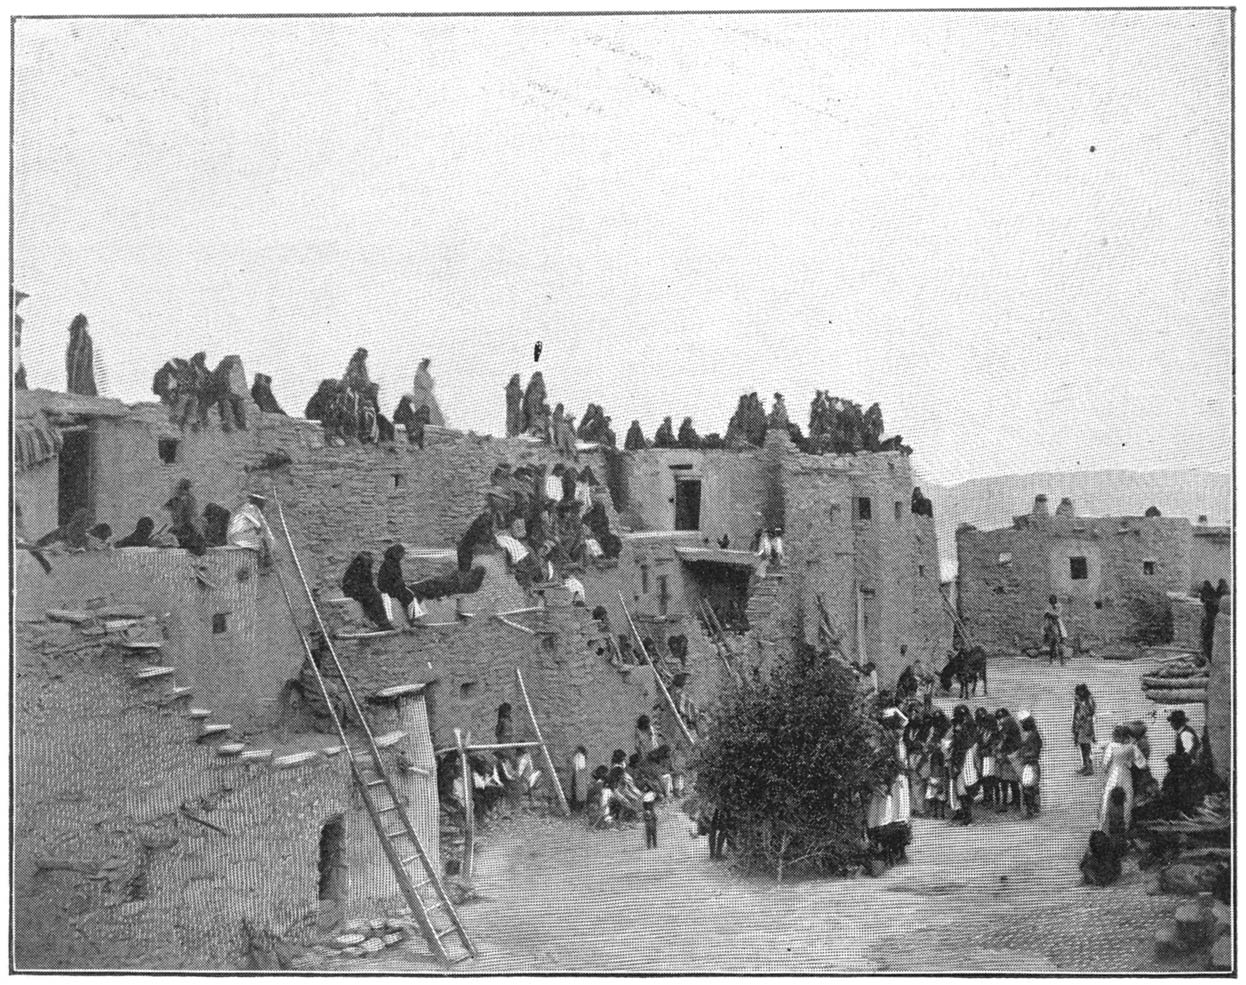 Pueblo Indians watching a Sacred Dance